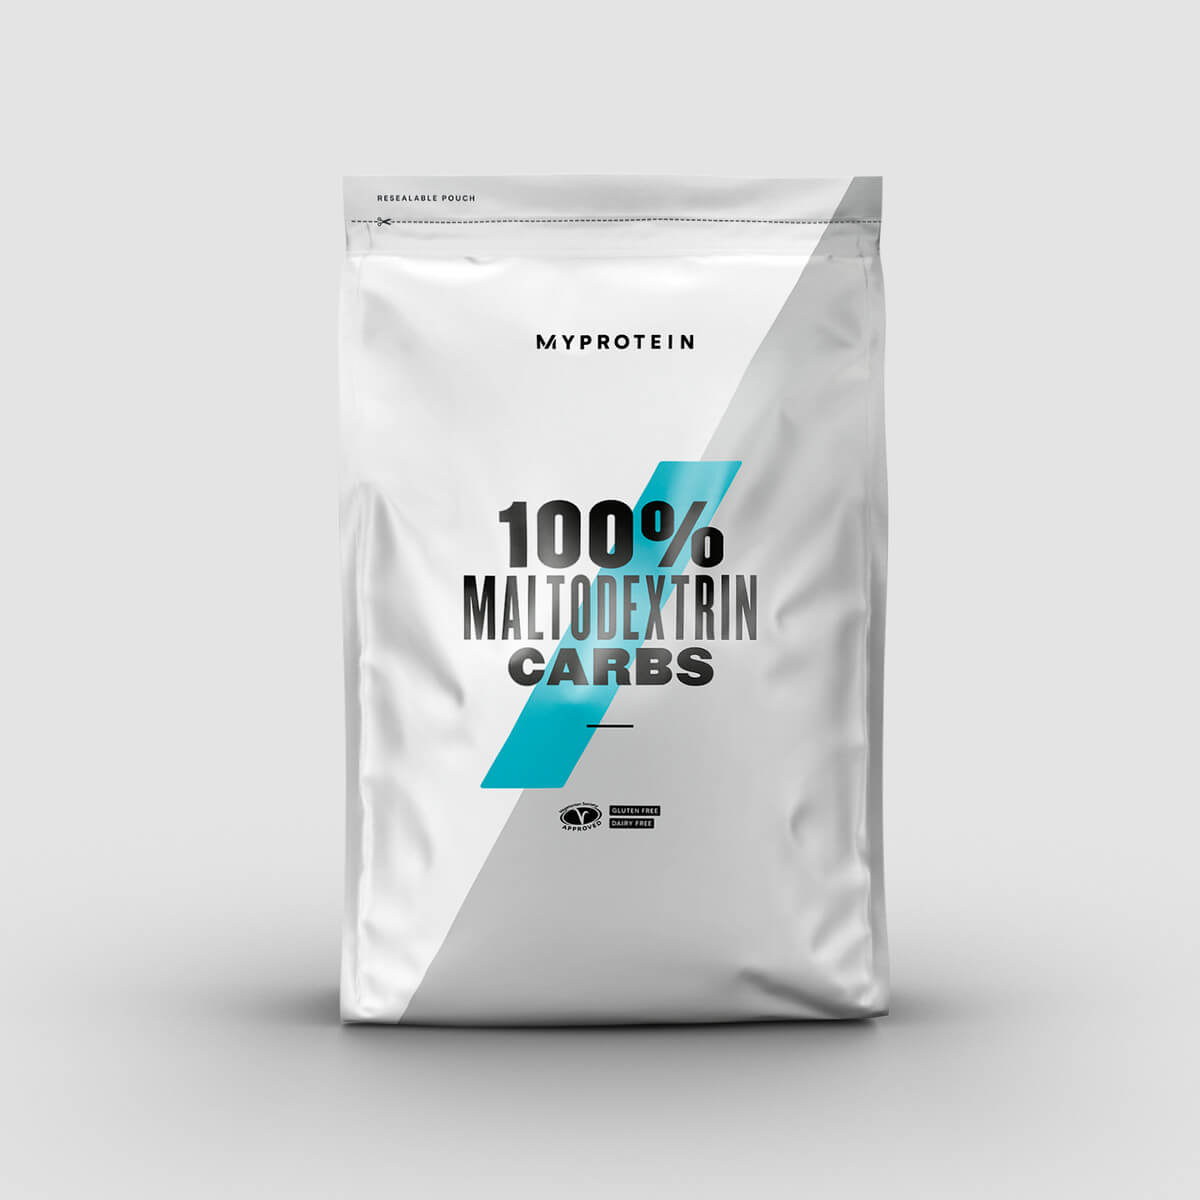 Myprotein Maltodestrina (Carboidrato) 100% - 2.5kg - Senza aroma